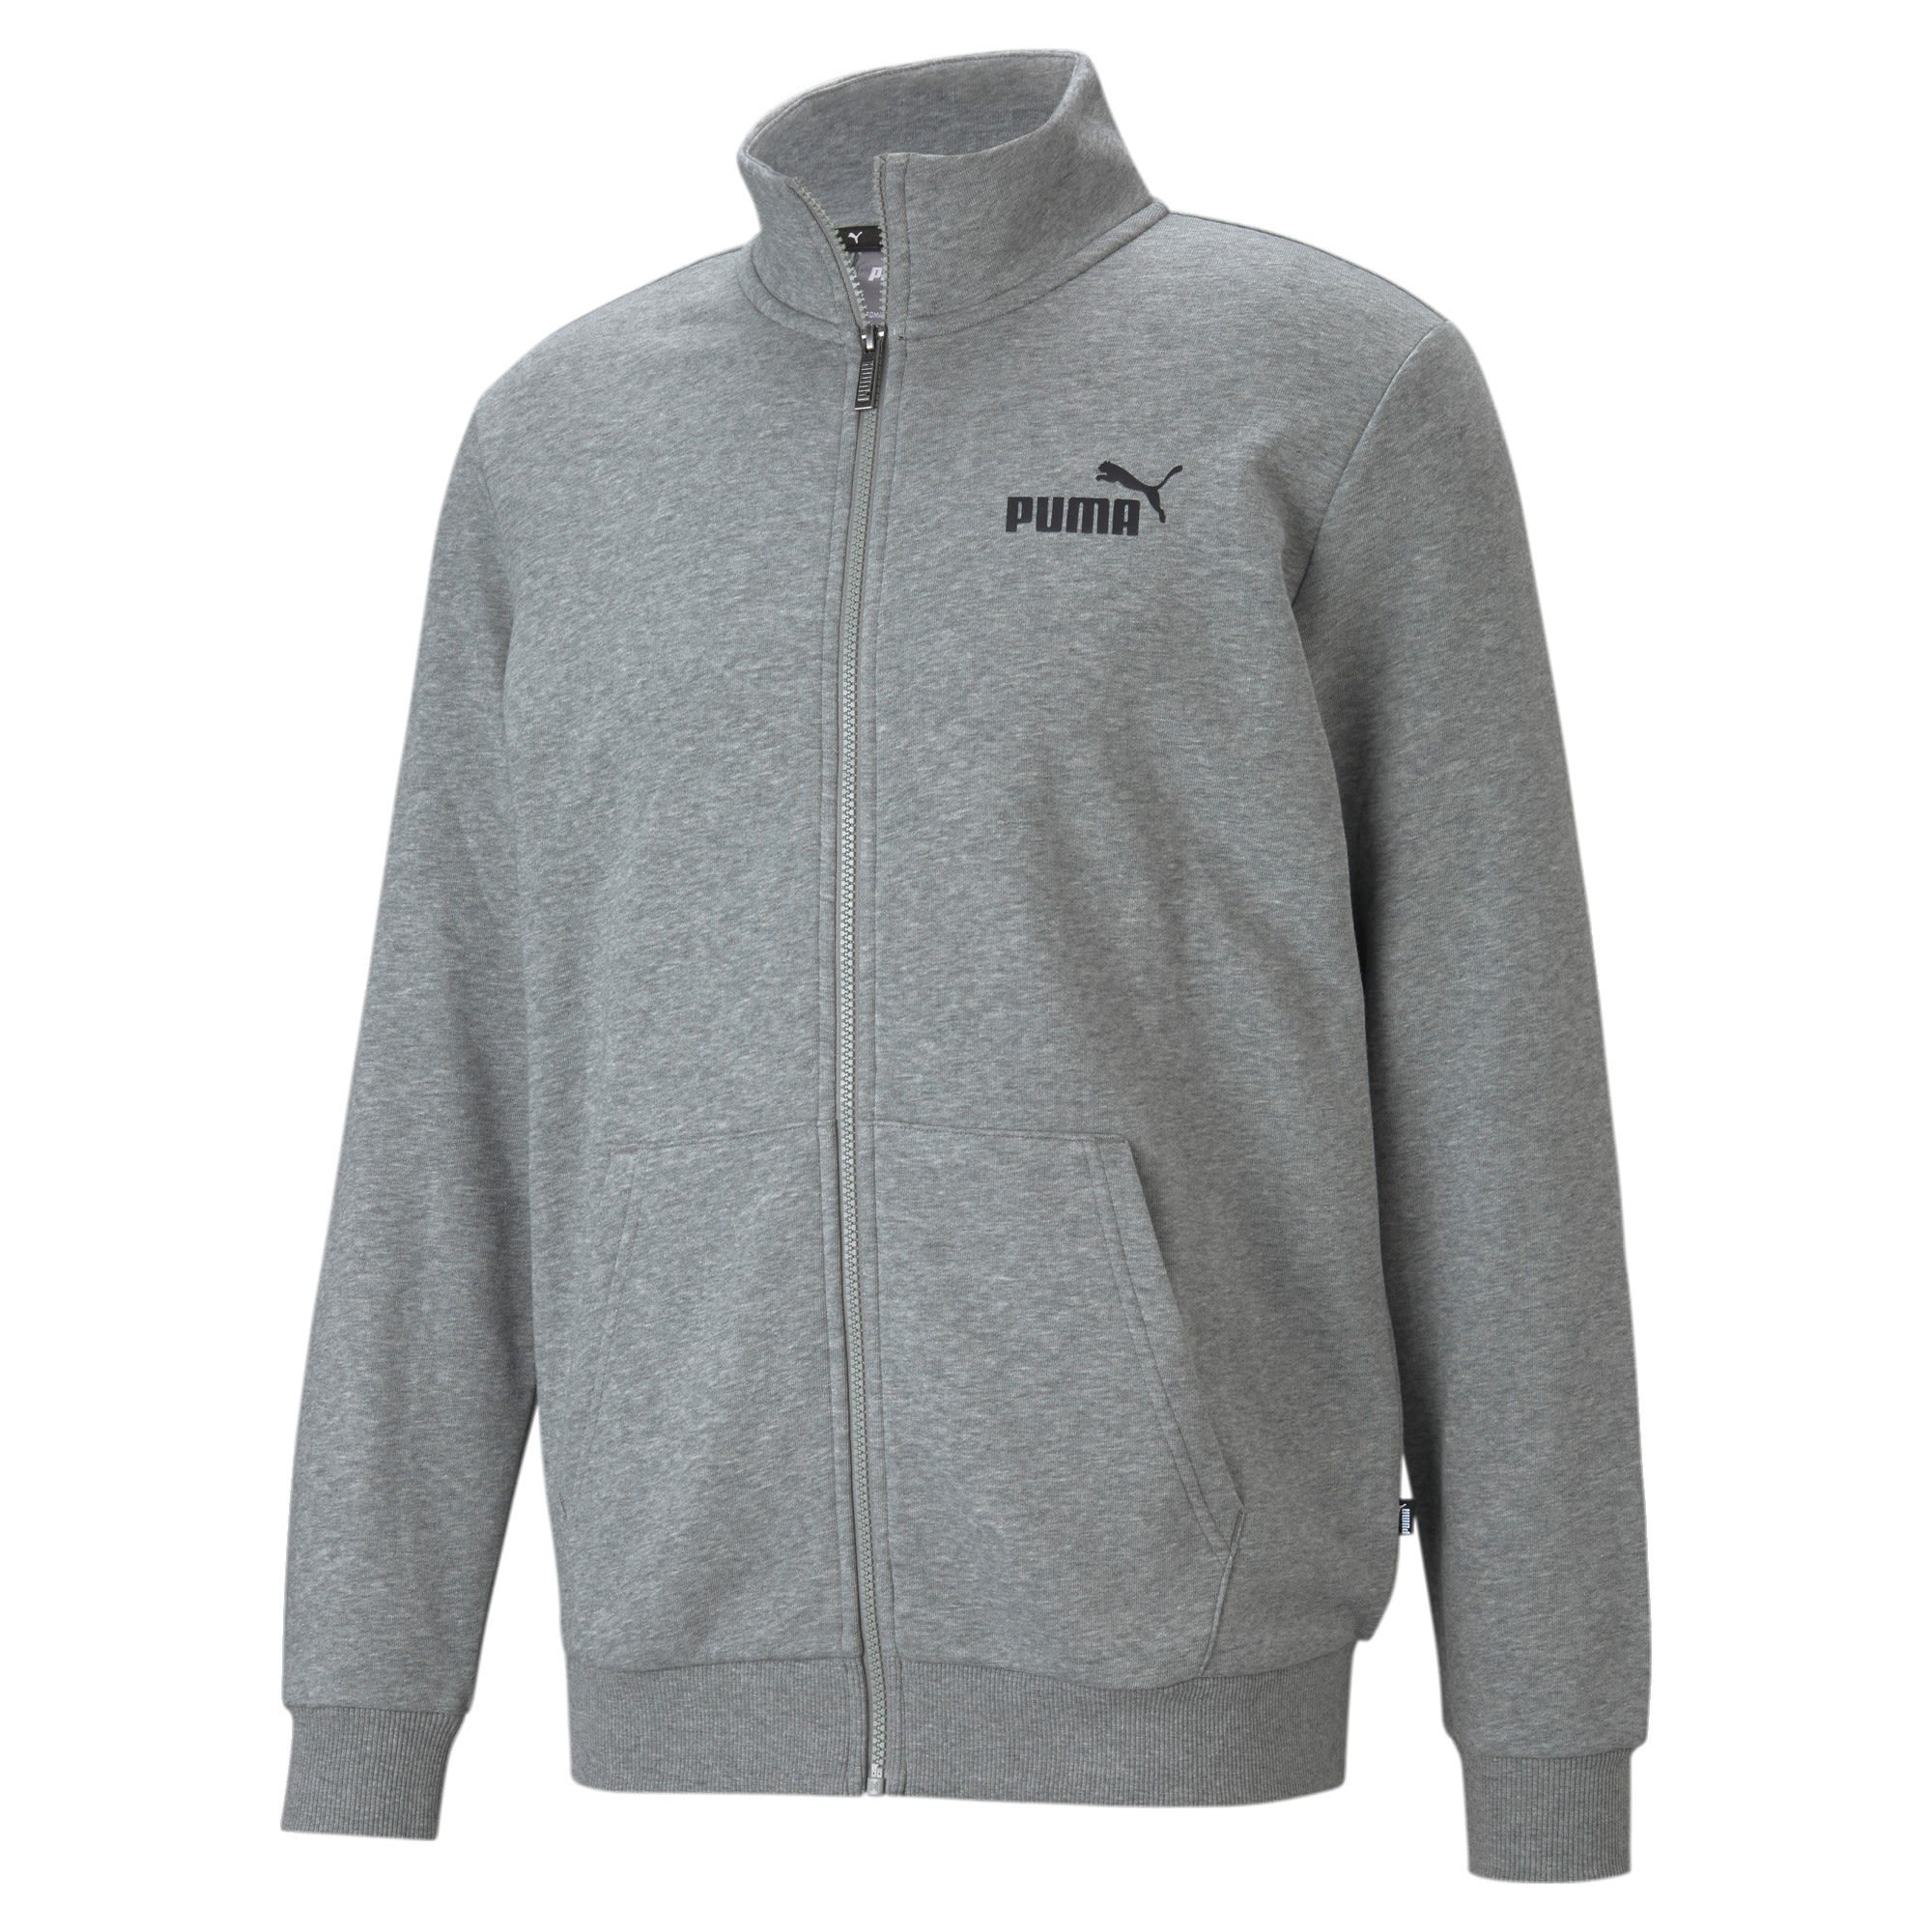 Puma Essentials Track Jacket Grau- Male Anoraks- Grsse S - Farbe Medium Gray Heather